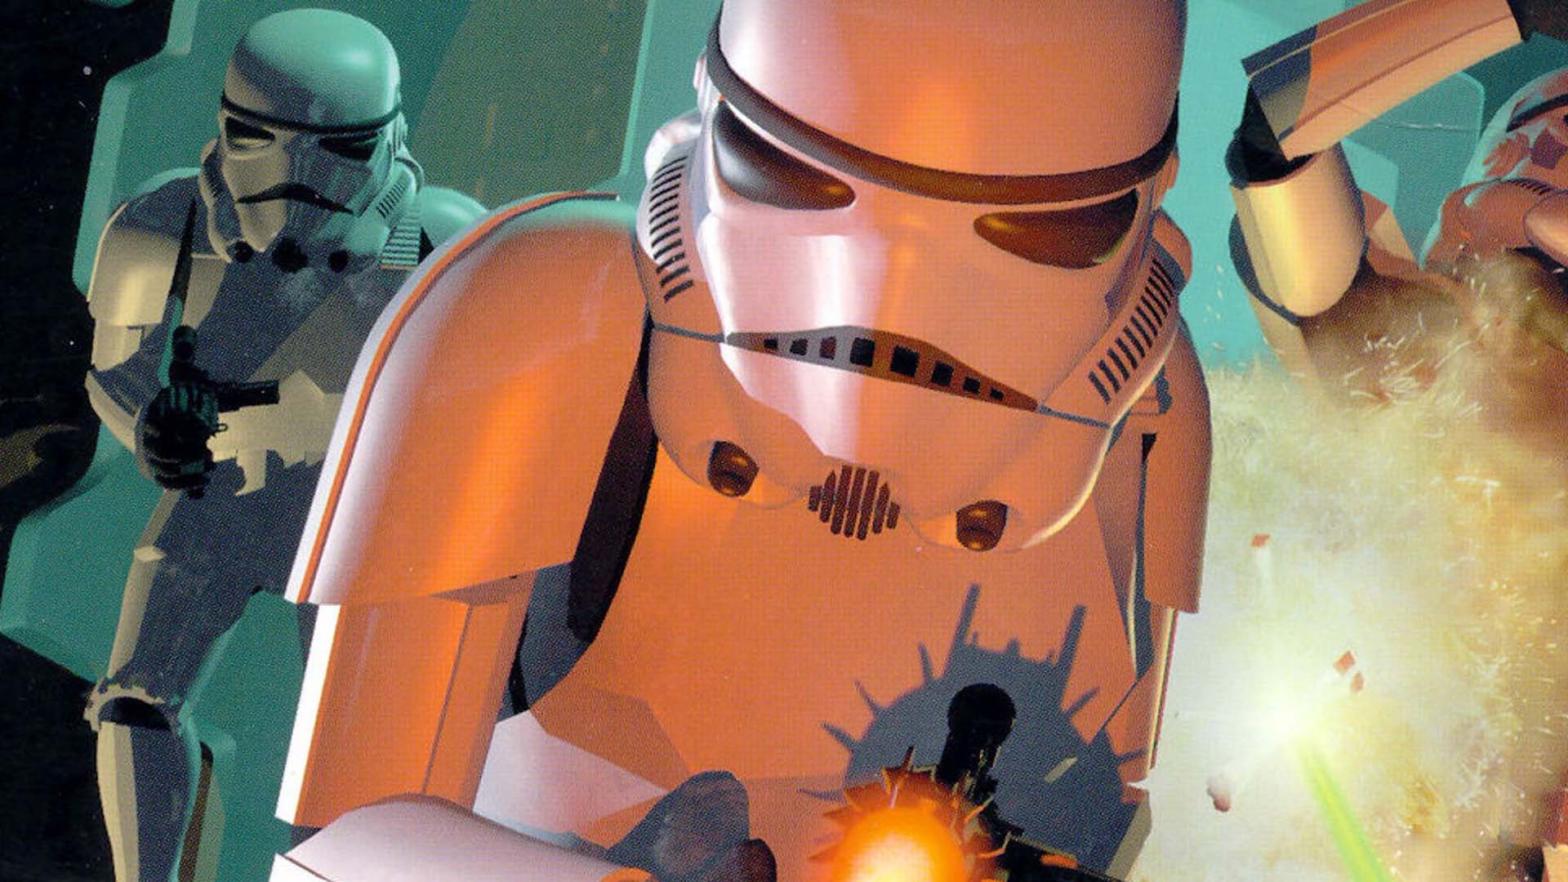 Star Wars: Dark Forces cover art (Image: Lucasfilm / Disney)